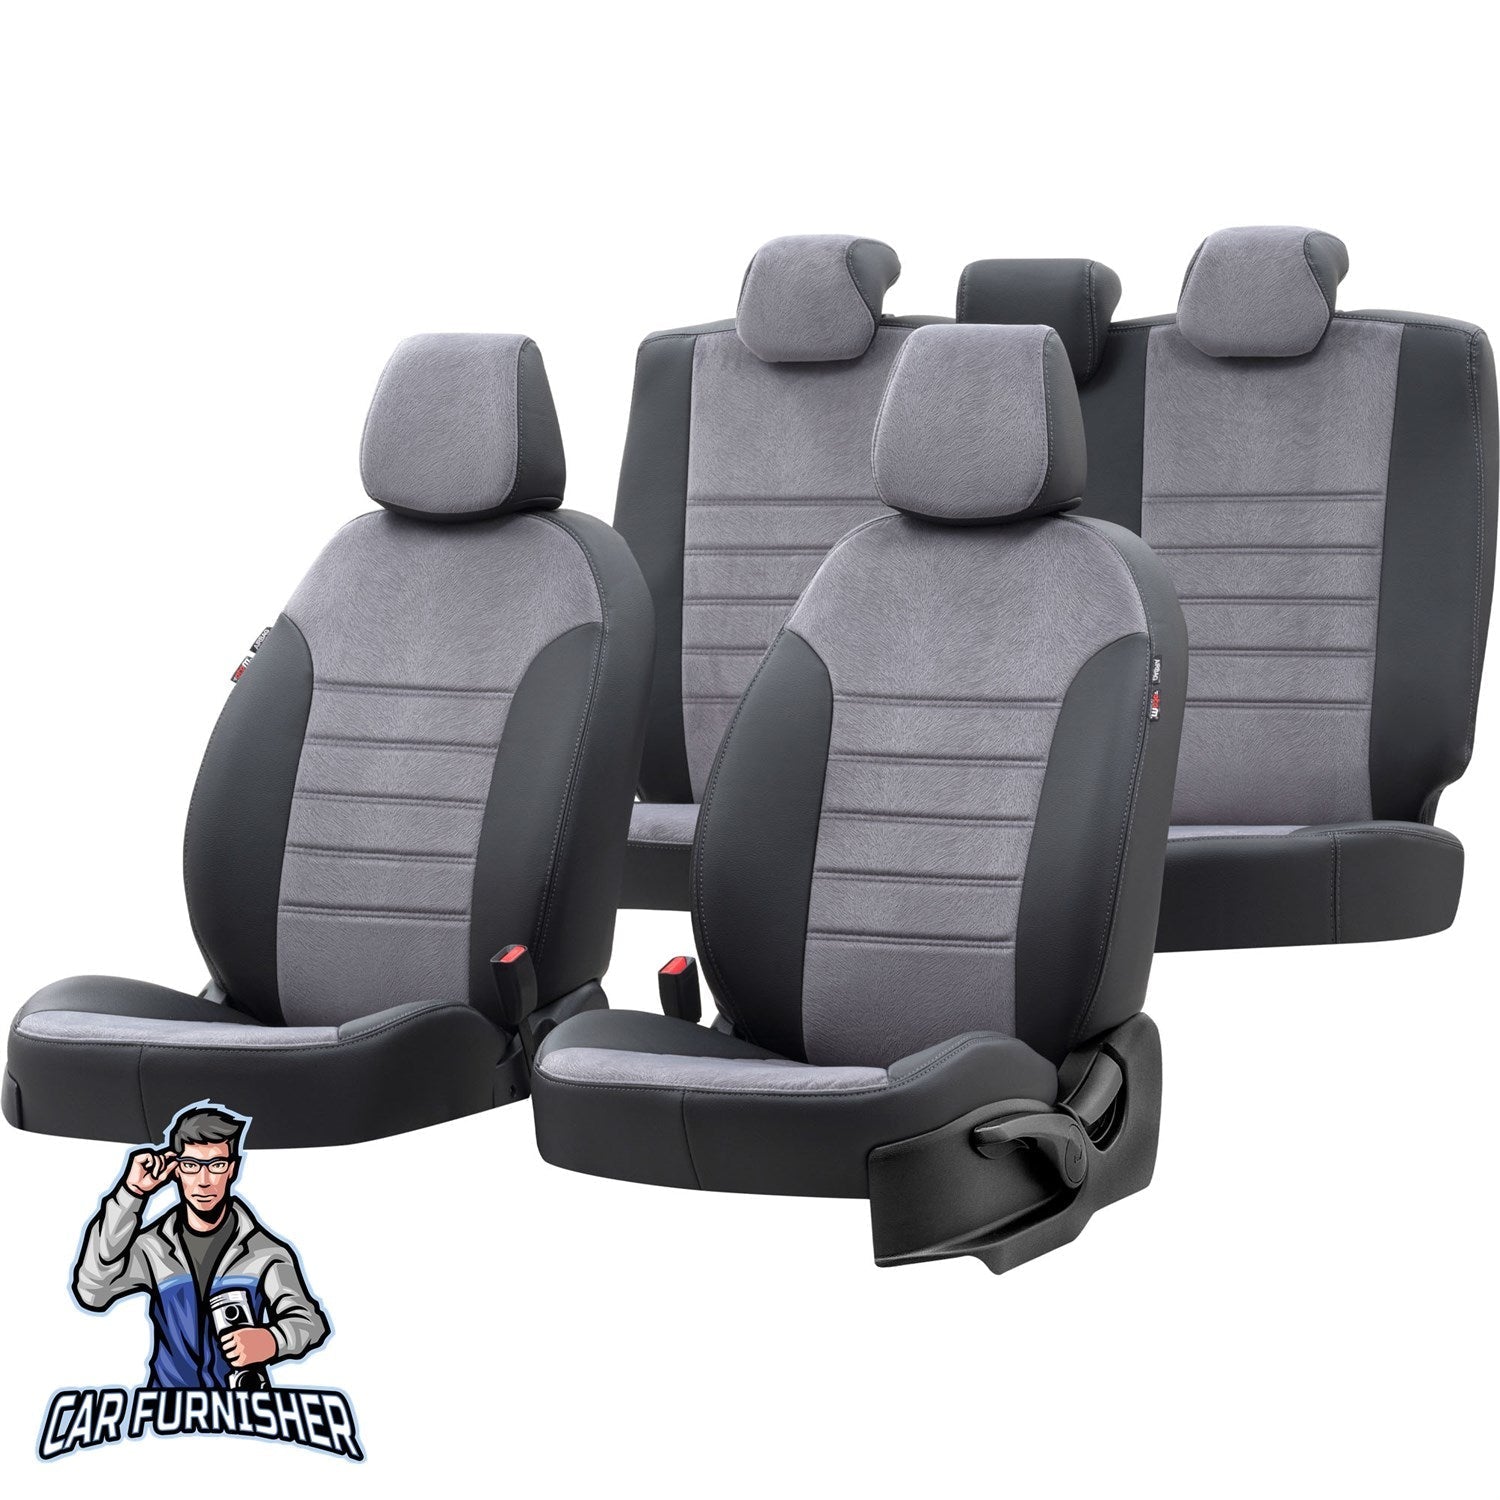 Chevrolet Tahoe Car Seat Covers 2007-2014 GMT/LS/LTZ London Smoked Black Full Set (5 Seats + Handrest) Leather & Fabric